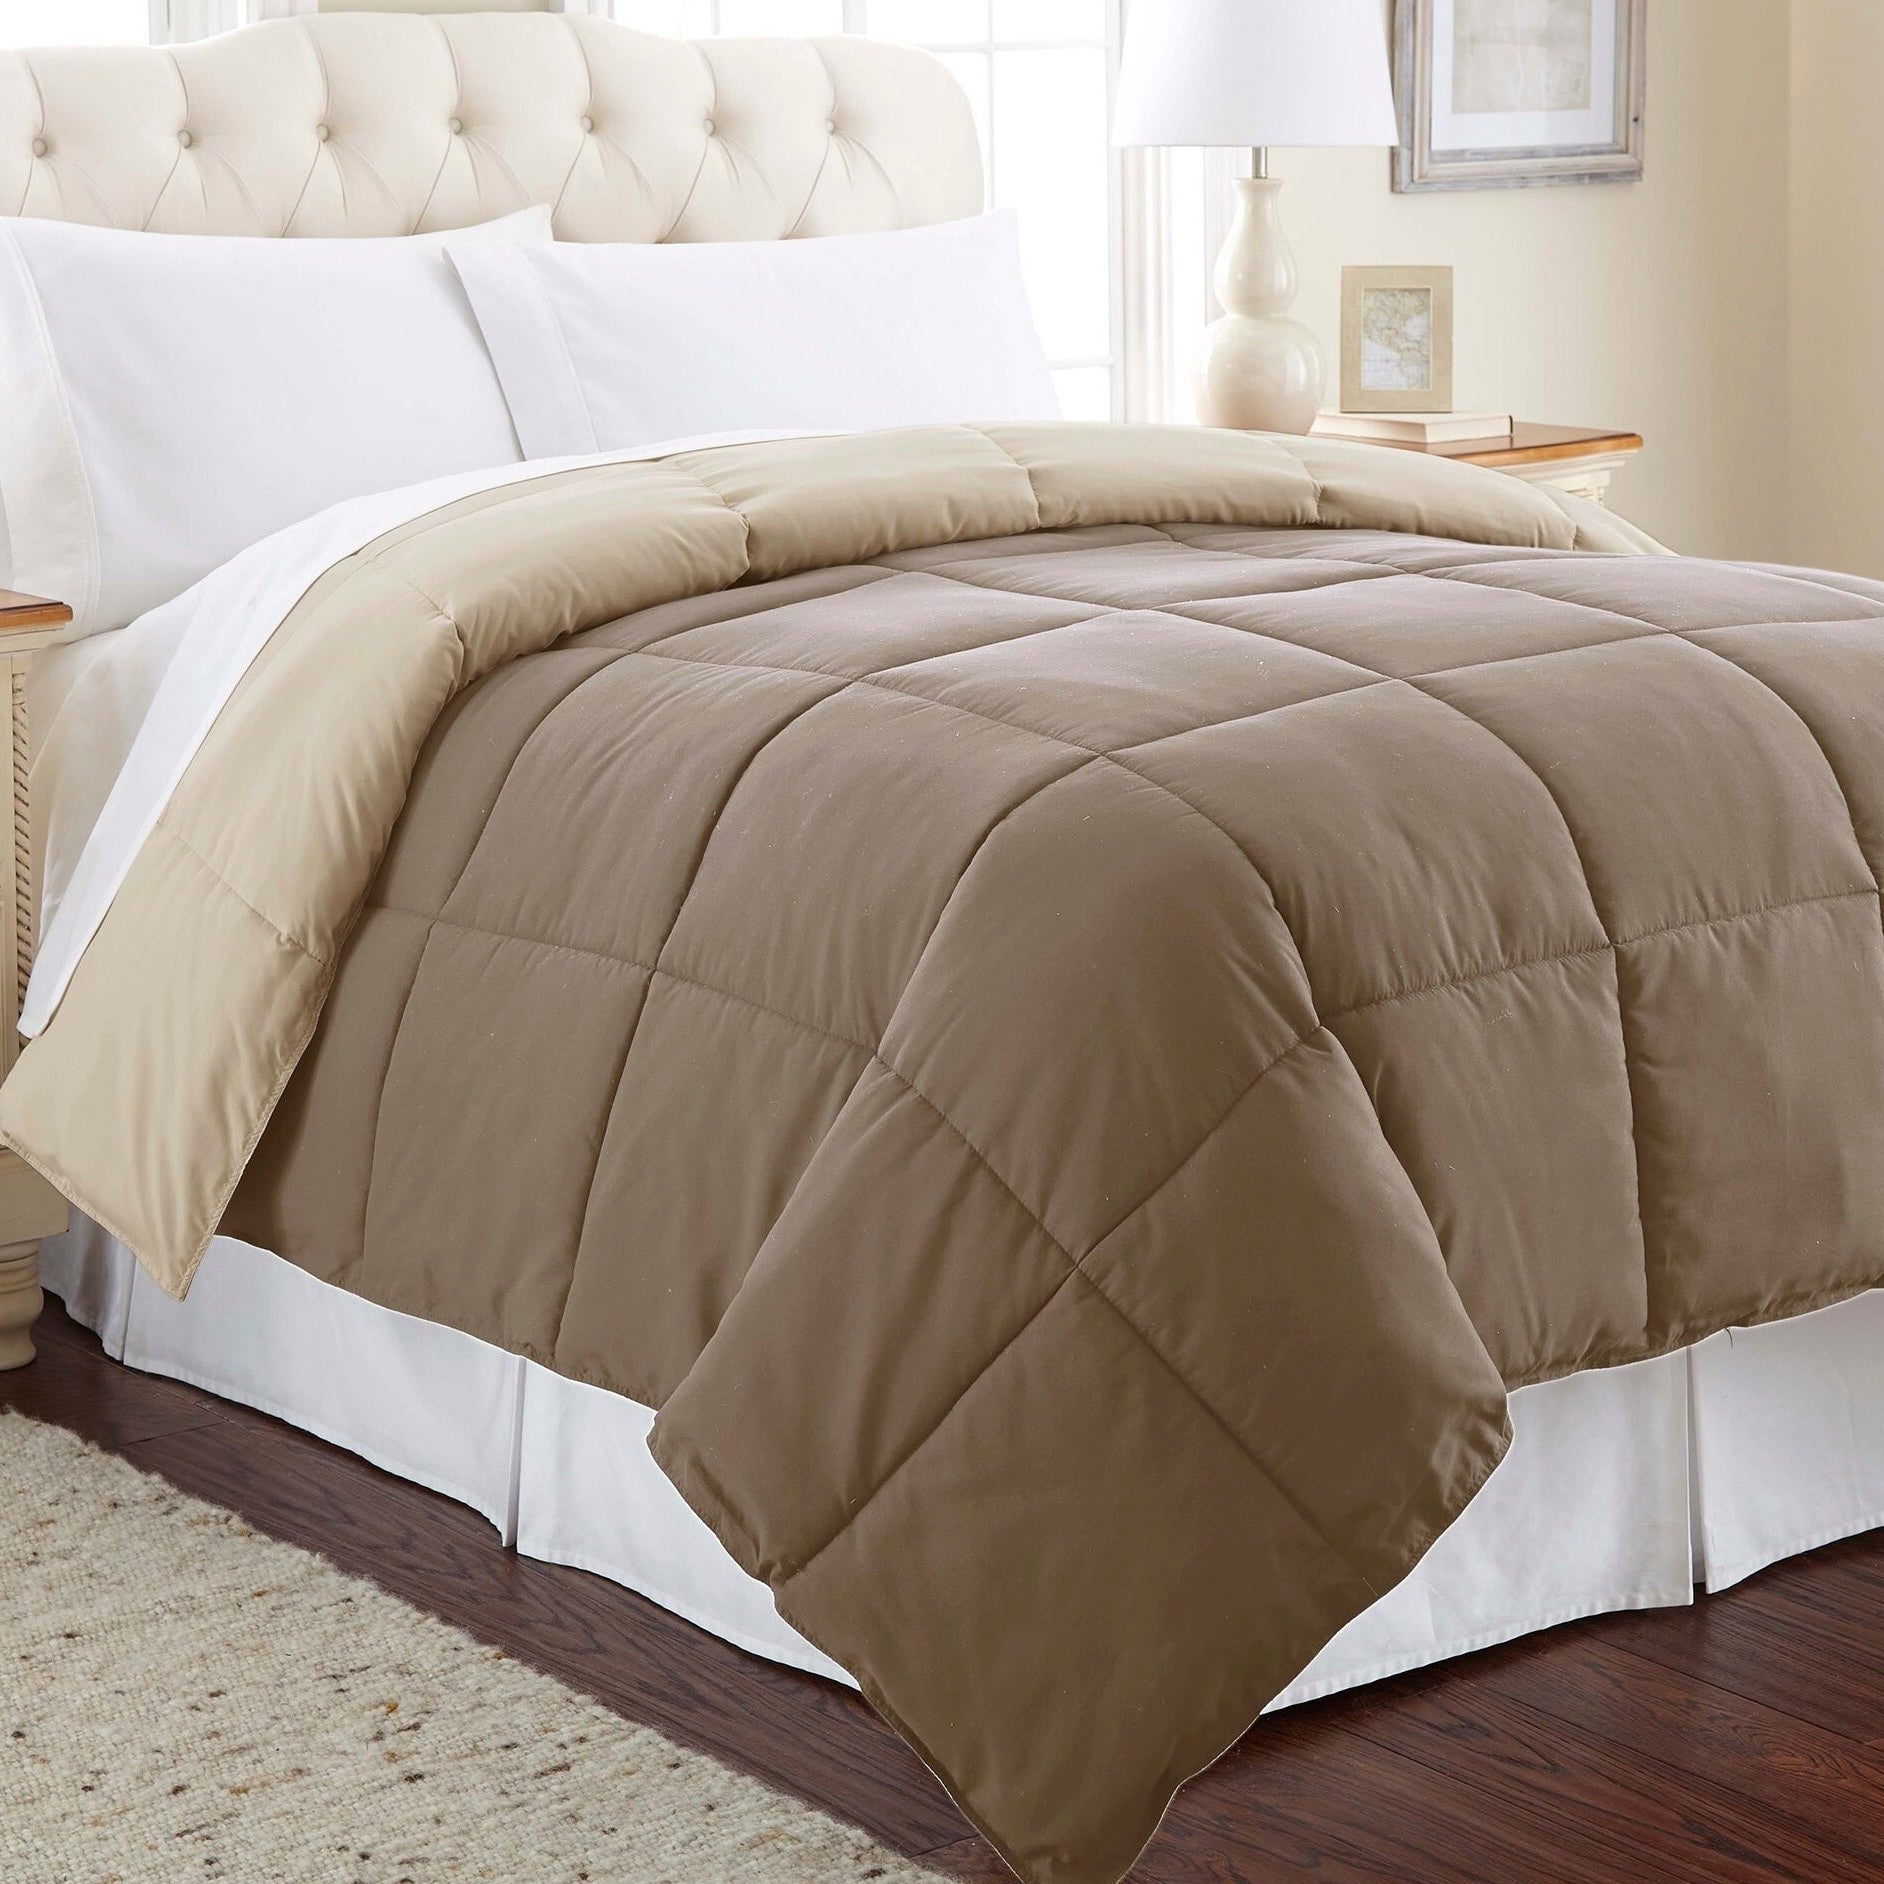 All-Season Reversible down Alternative Comforter